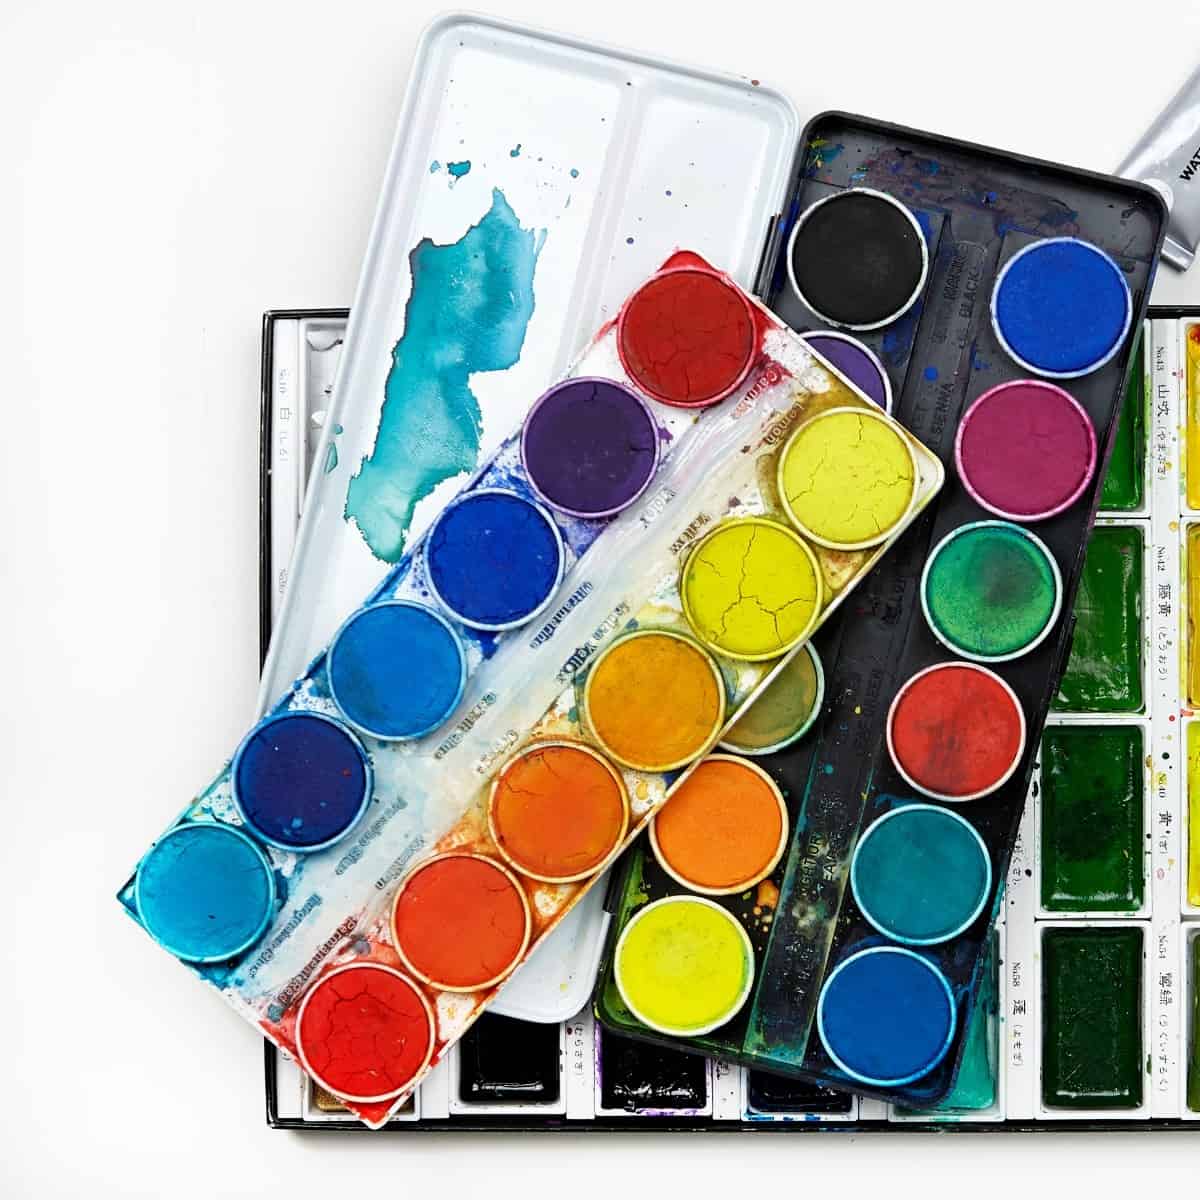 Watercolor Paints Explained  Should You Get Pans, Tubes, or Bottles?